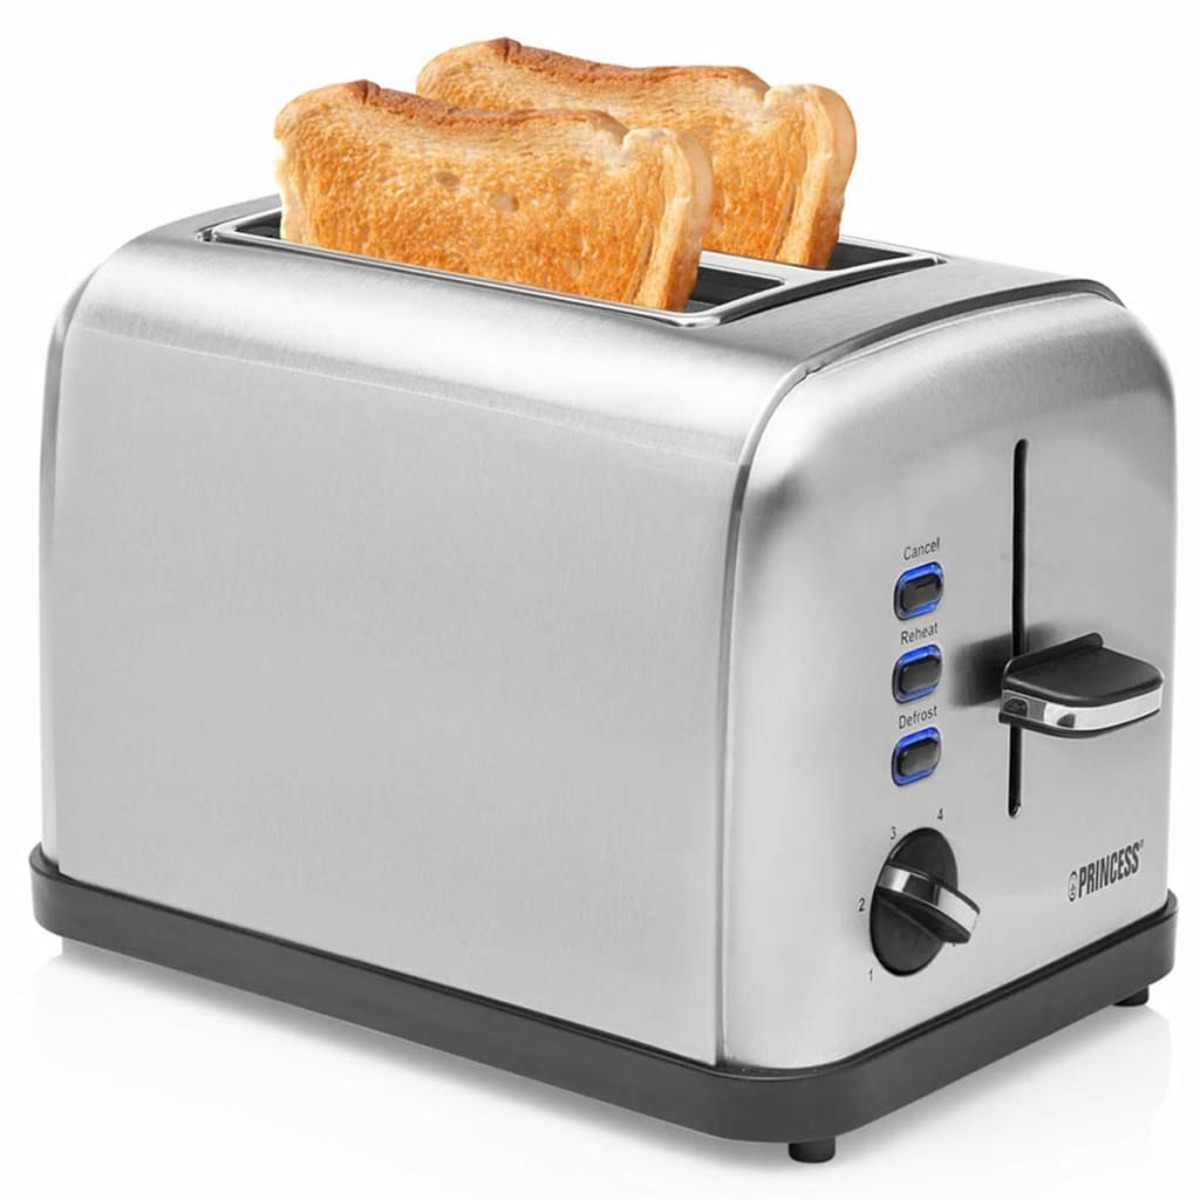 PRINCESS 418383 Toaster 2) Grau Schlitze: (920 Watt